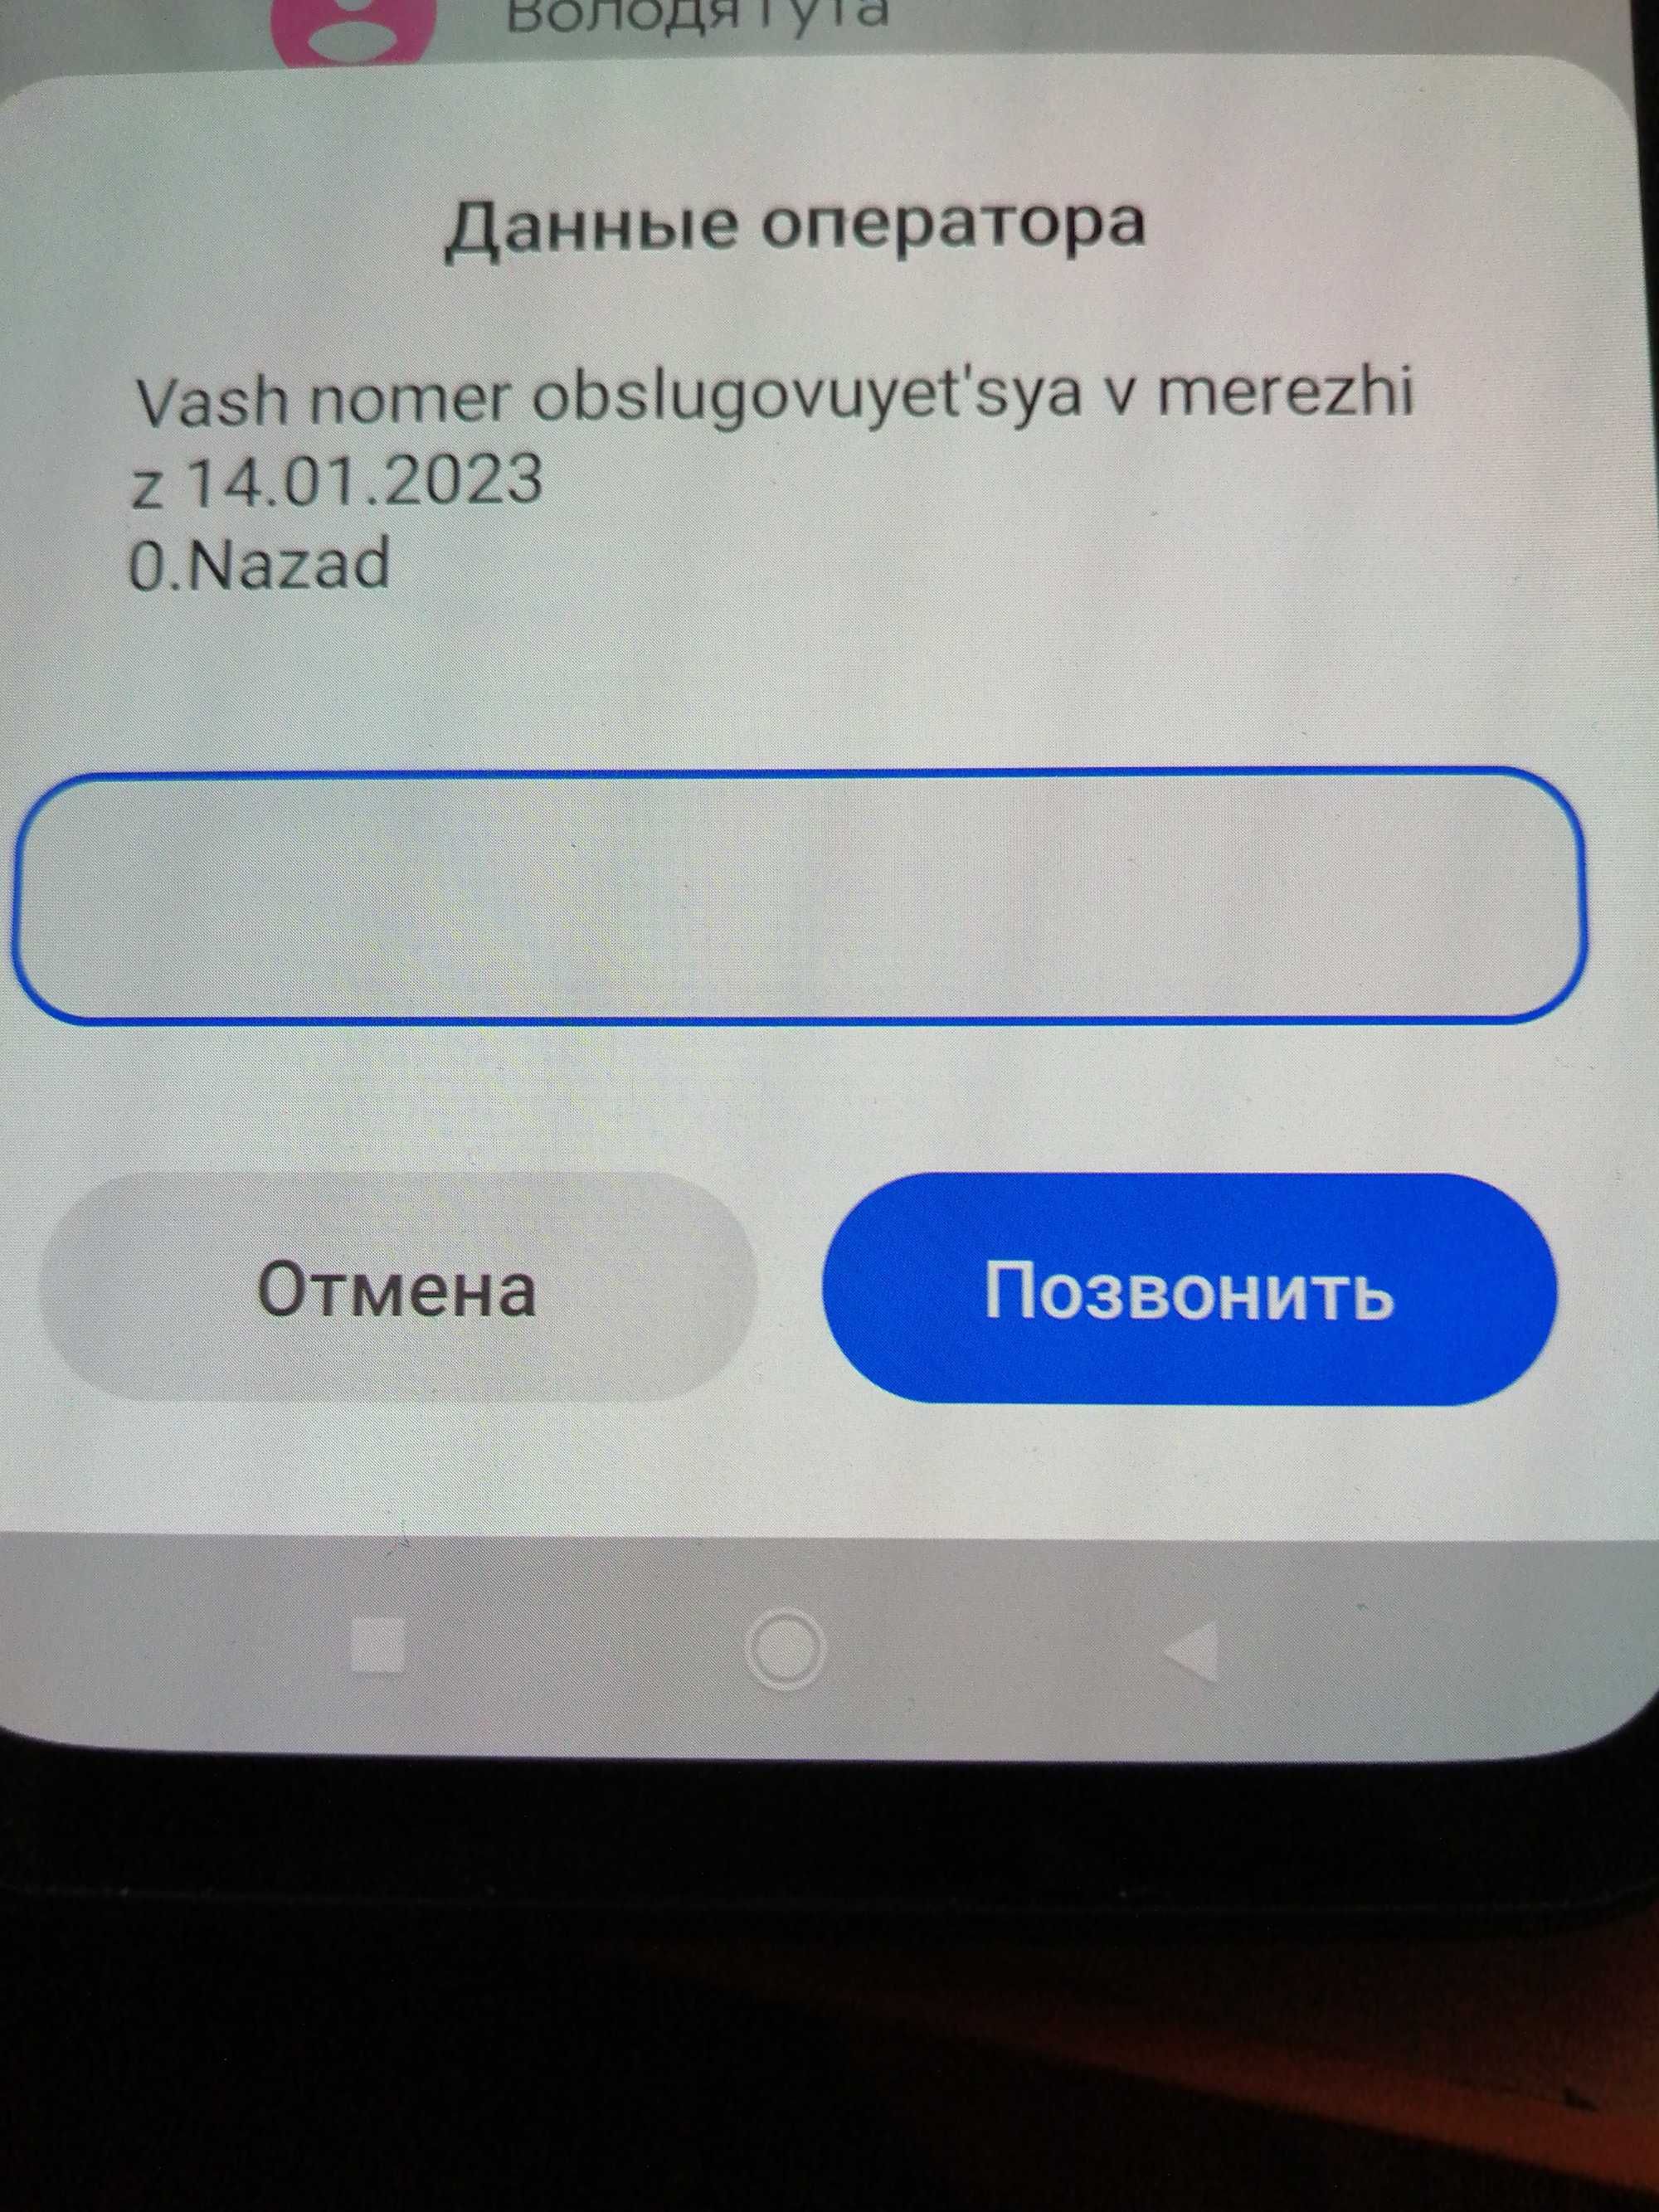 Karta sim starter Life (Ukraina) z internetem 4g 15Gb za 25zl roaming